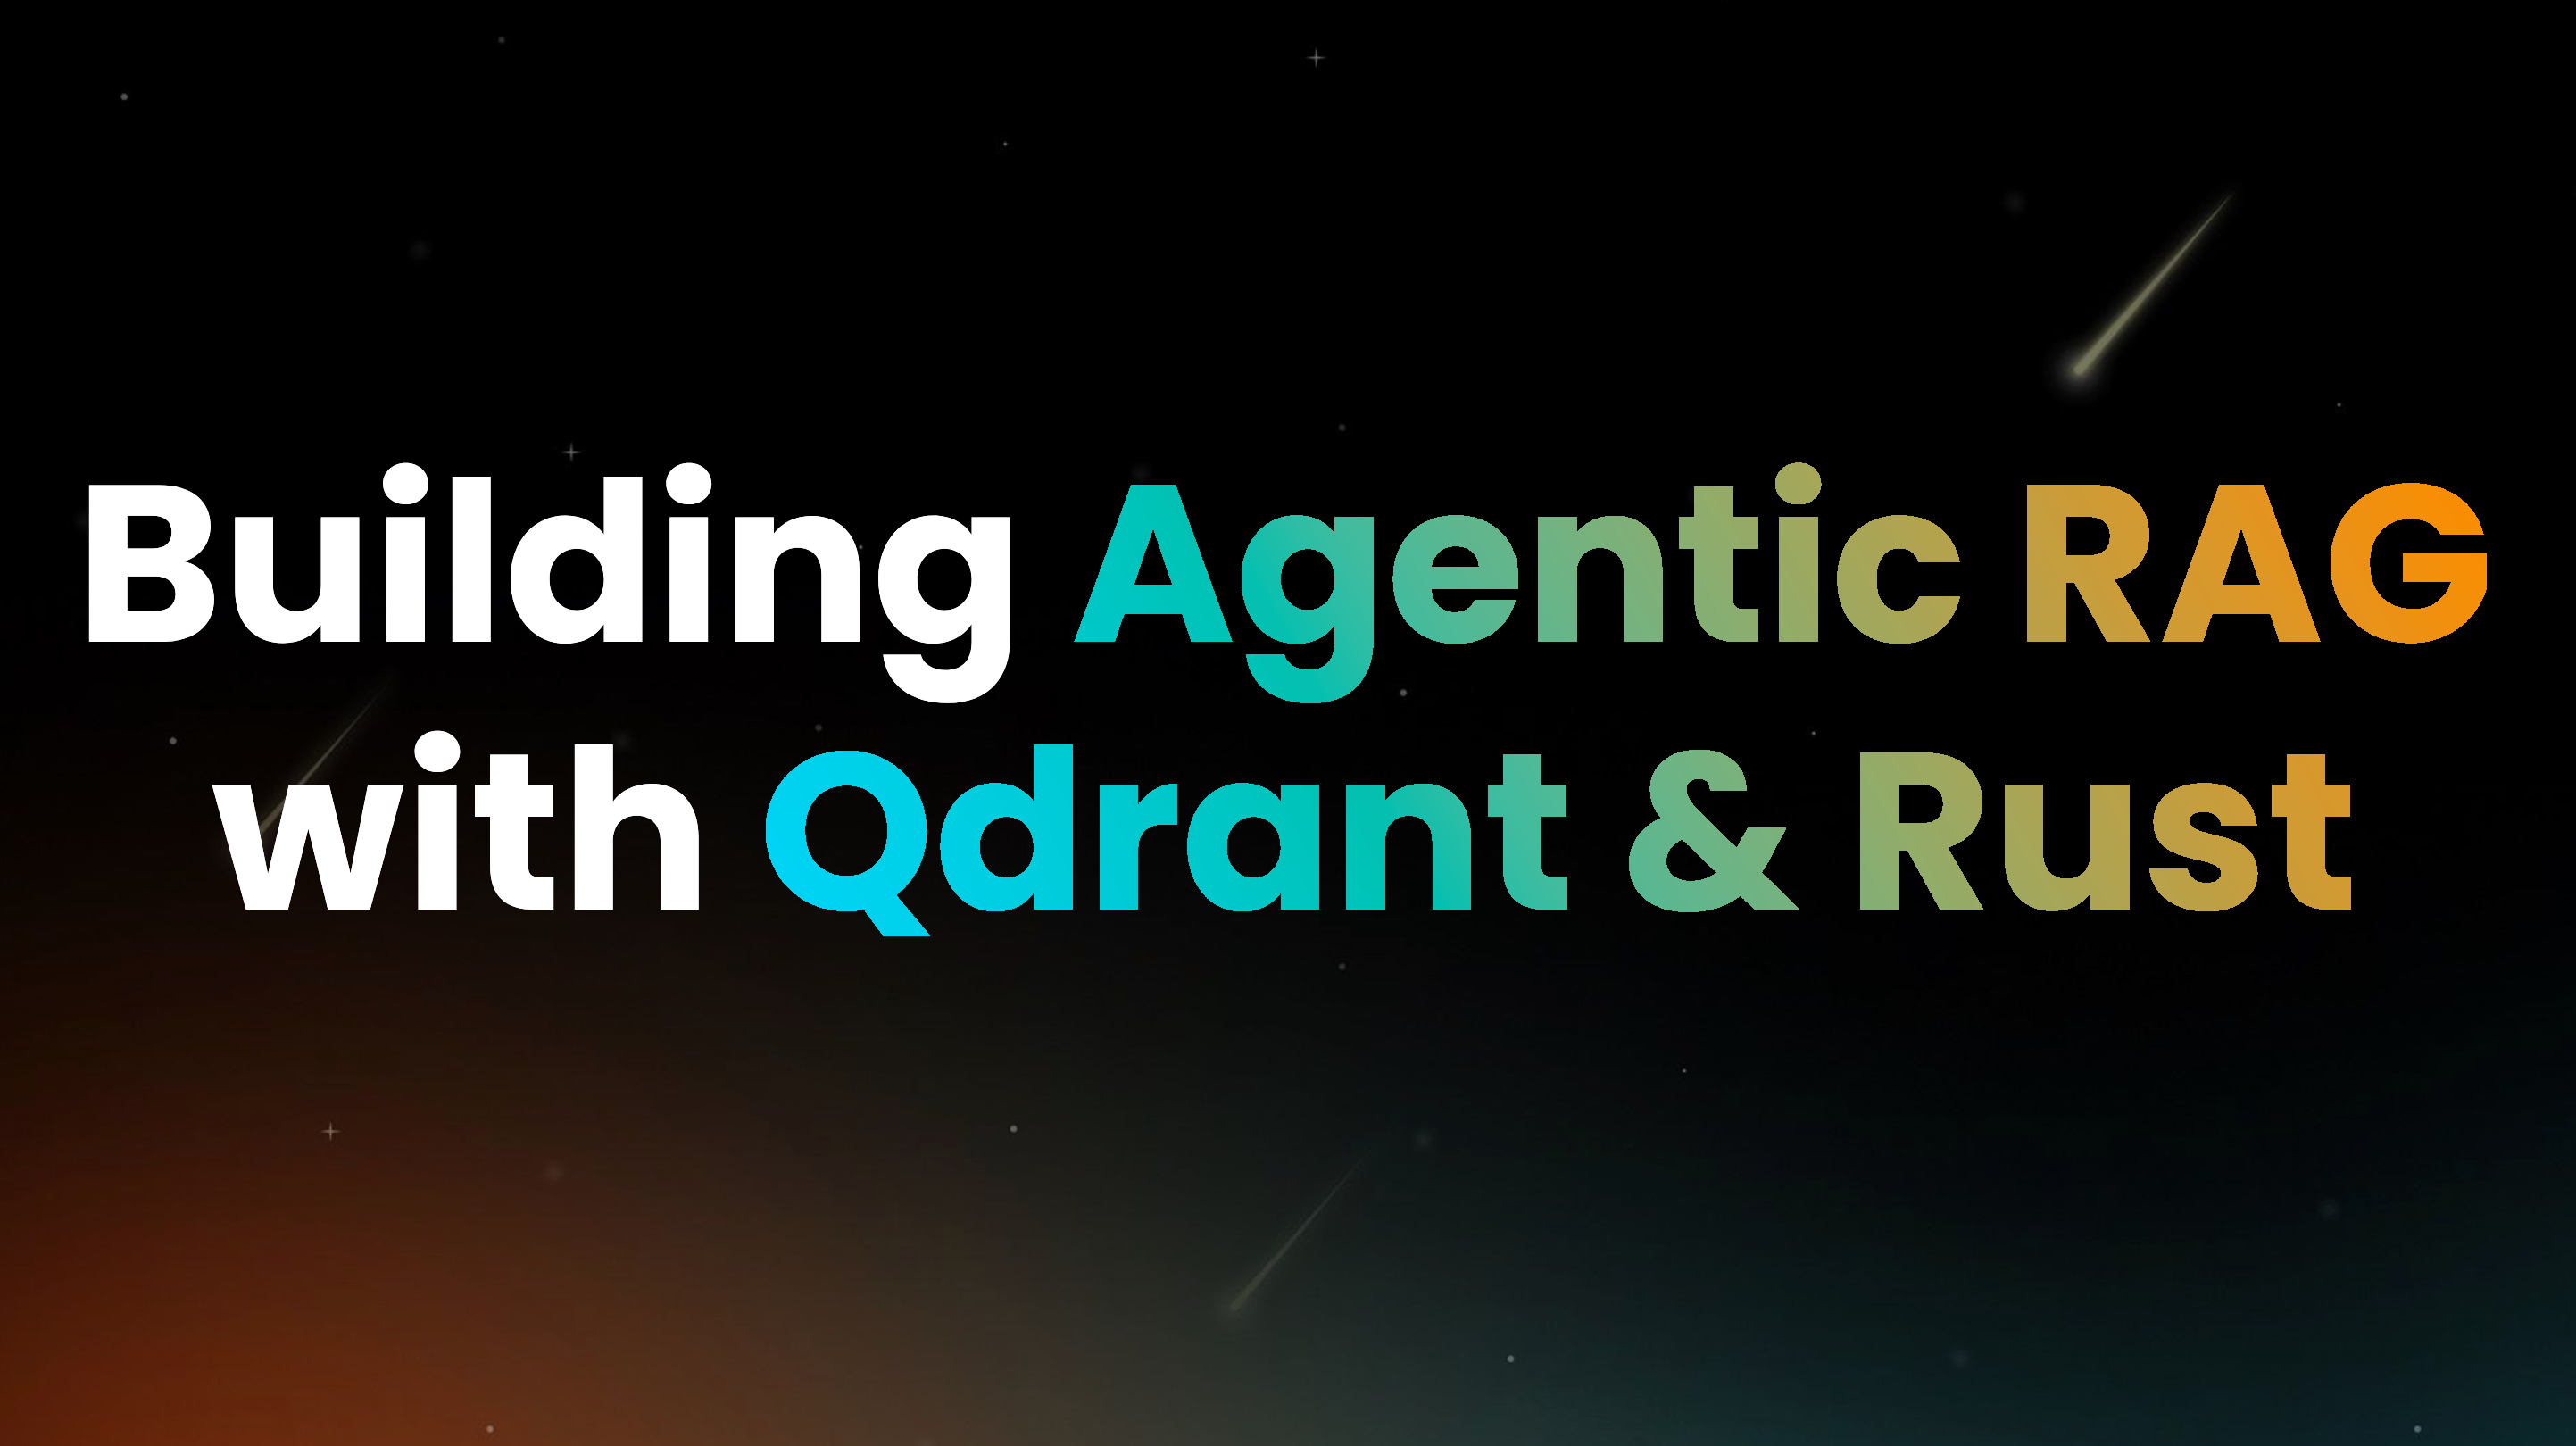 Building Agentic RAG with Rust, Qdrant & OpenAI